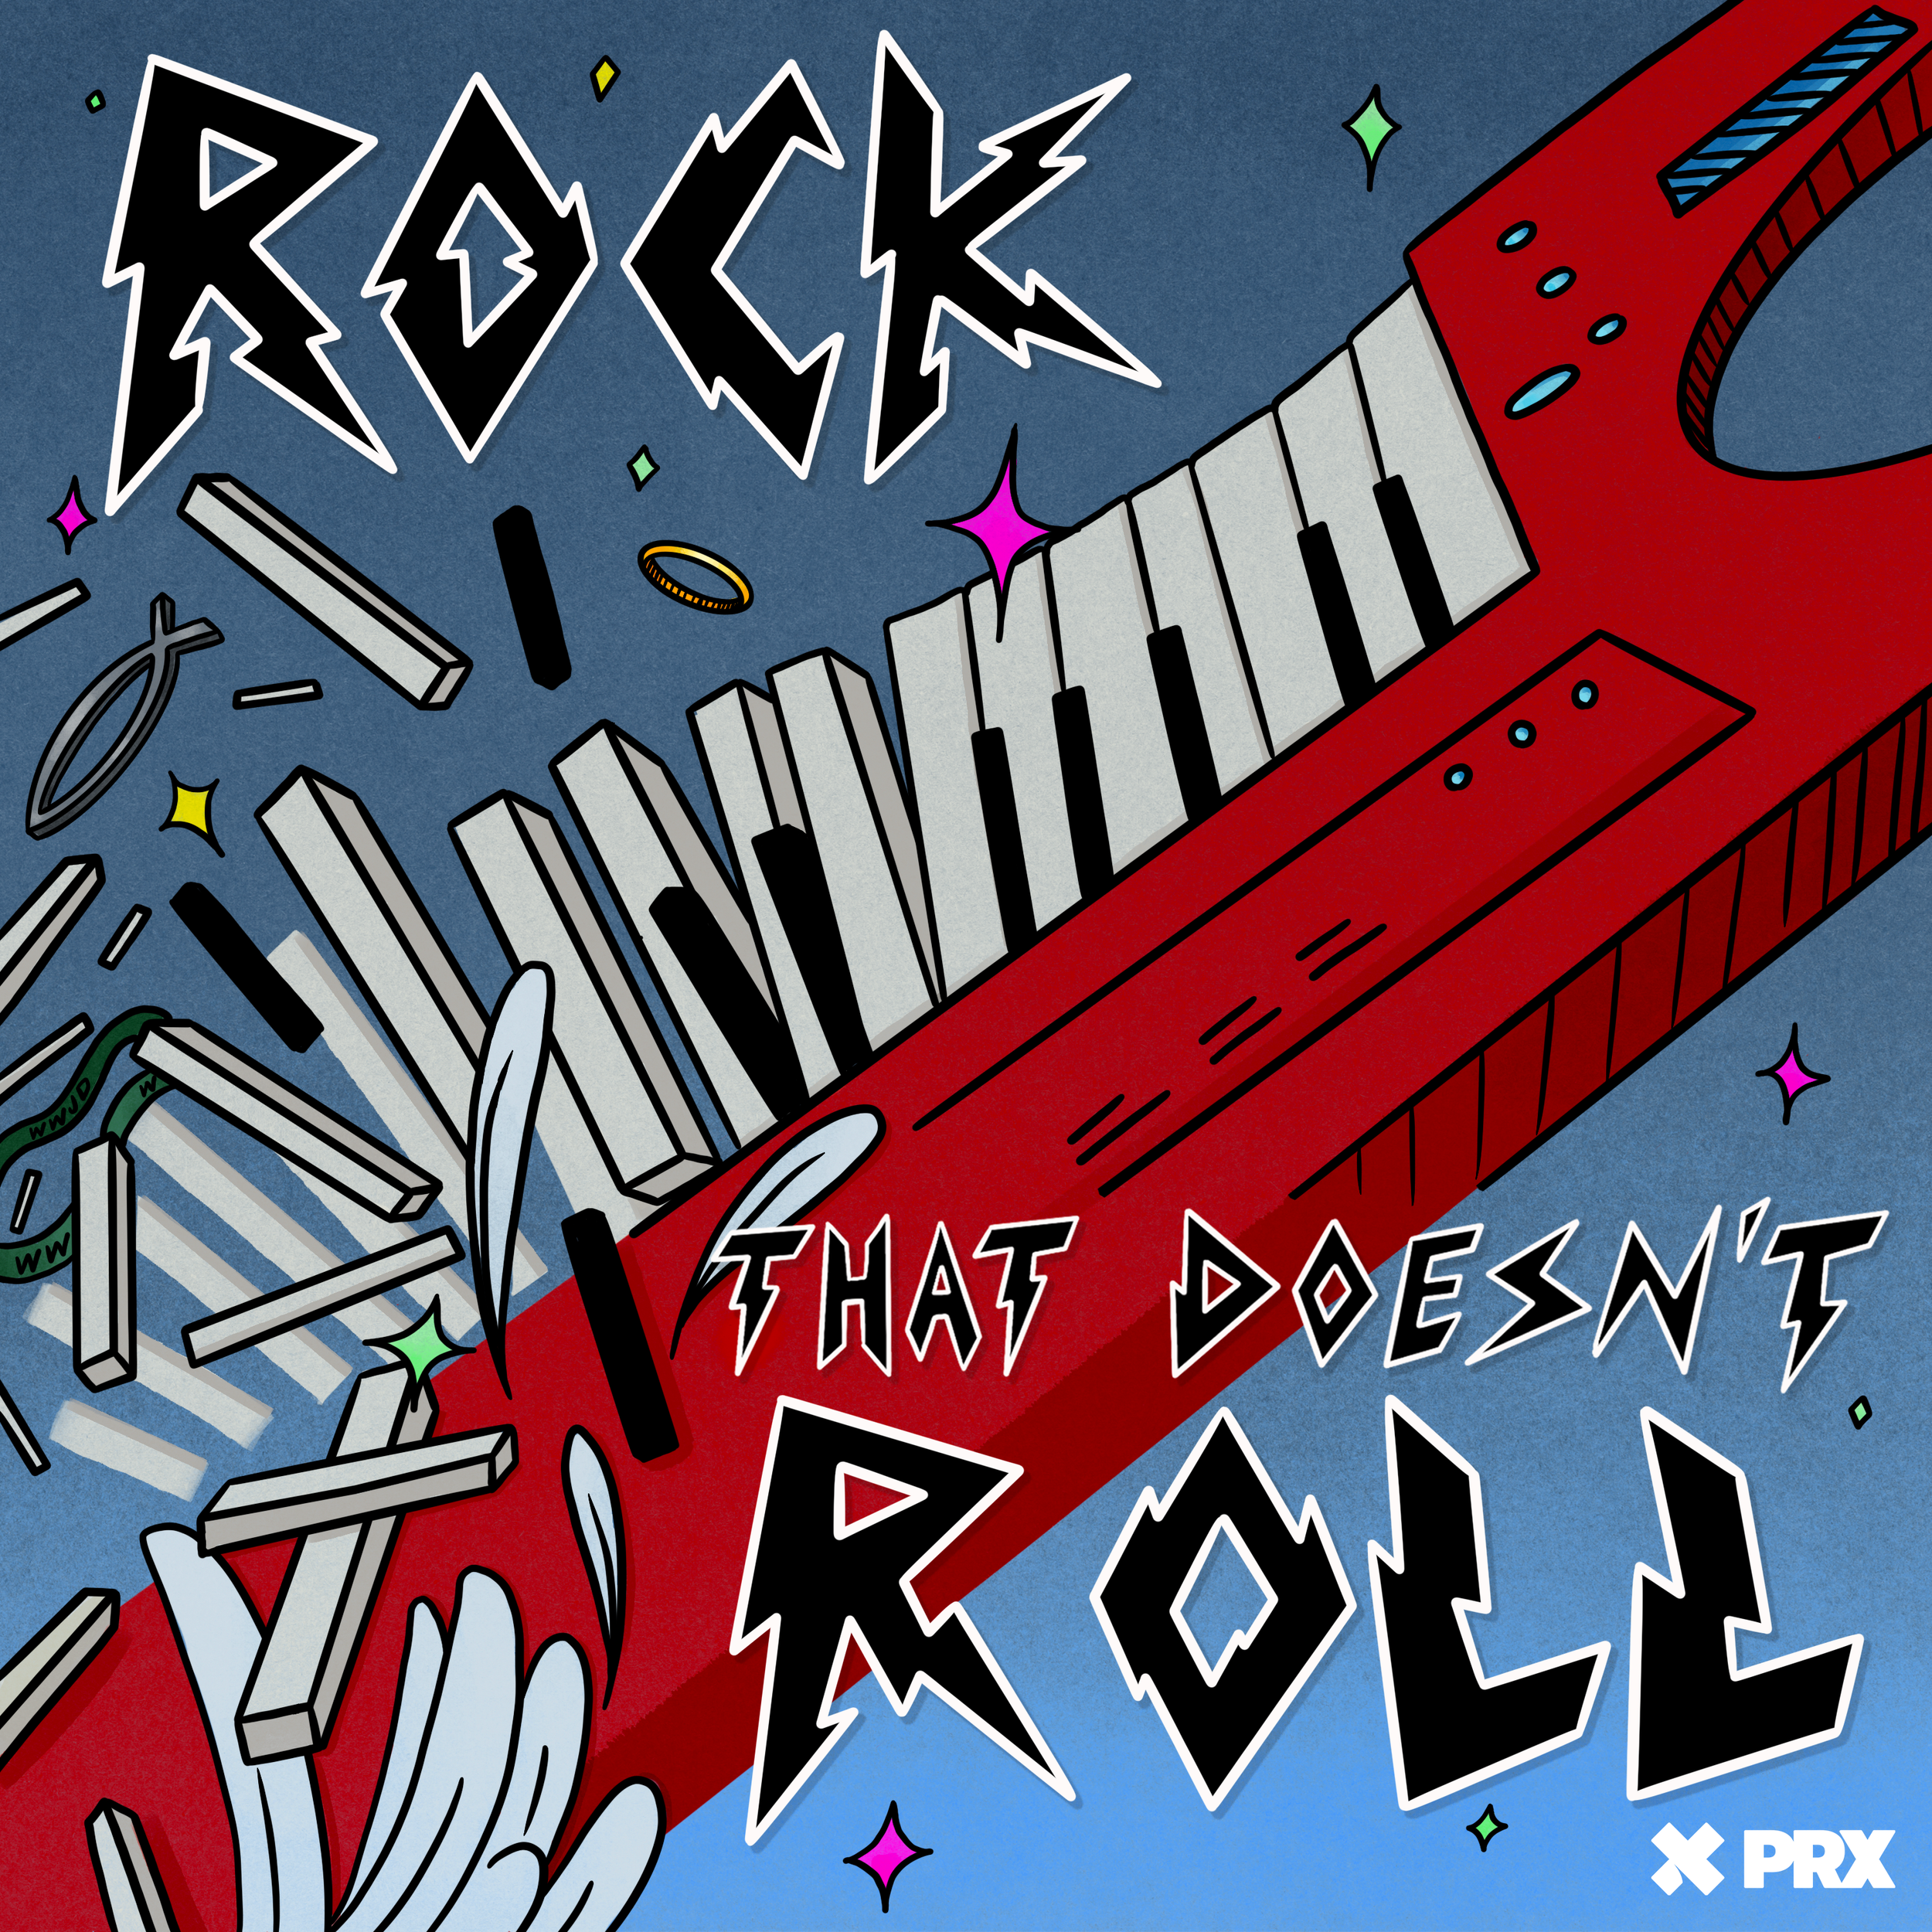 PRX – Rock That Doesn't Roll